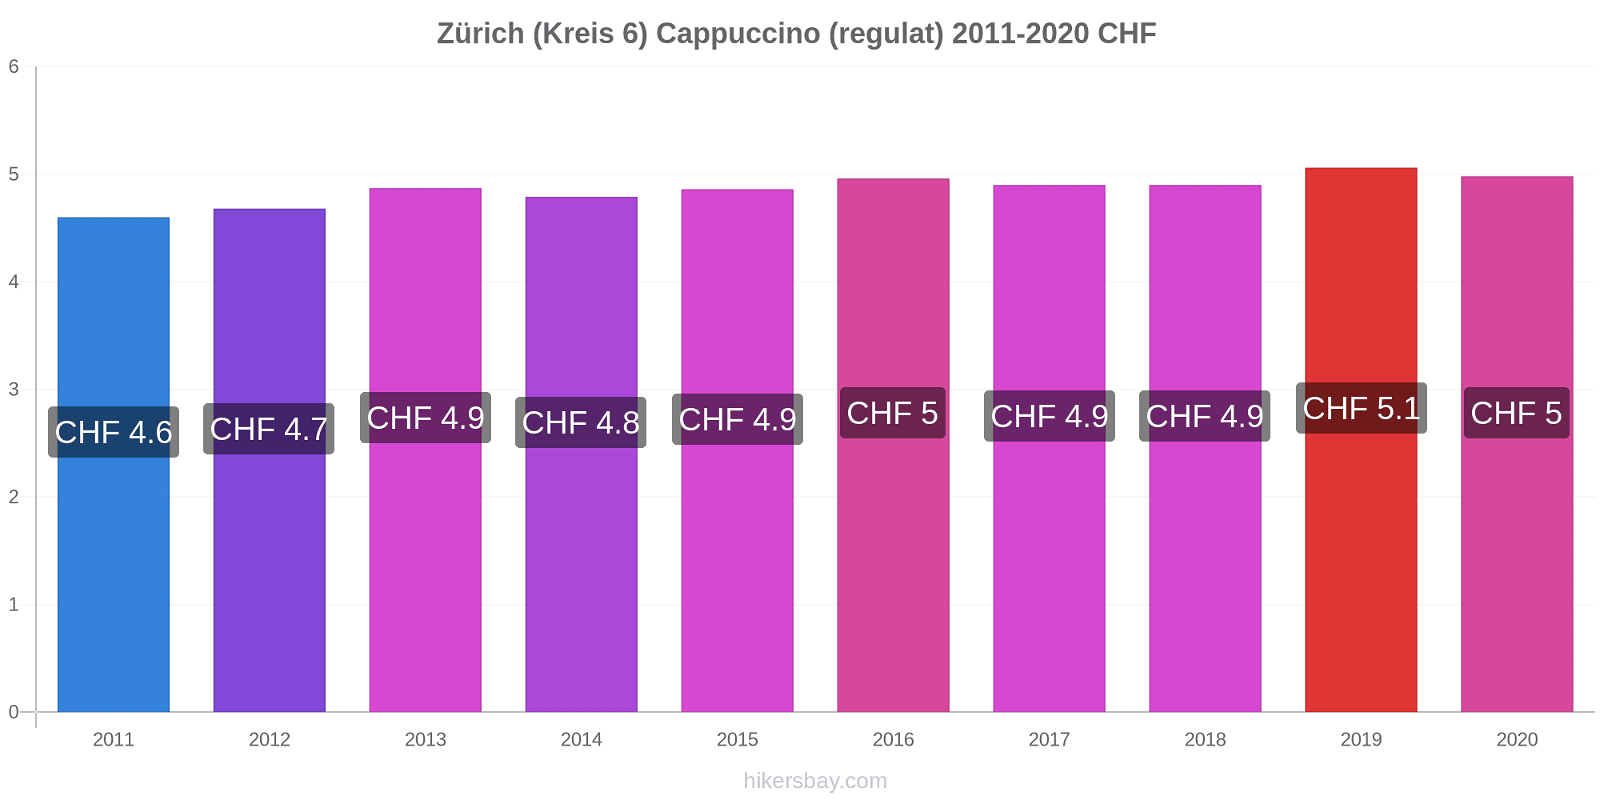 Zürich (Kreis 6) modificări de preț Cappuccino (regulat) hikersbay.com